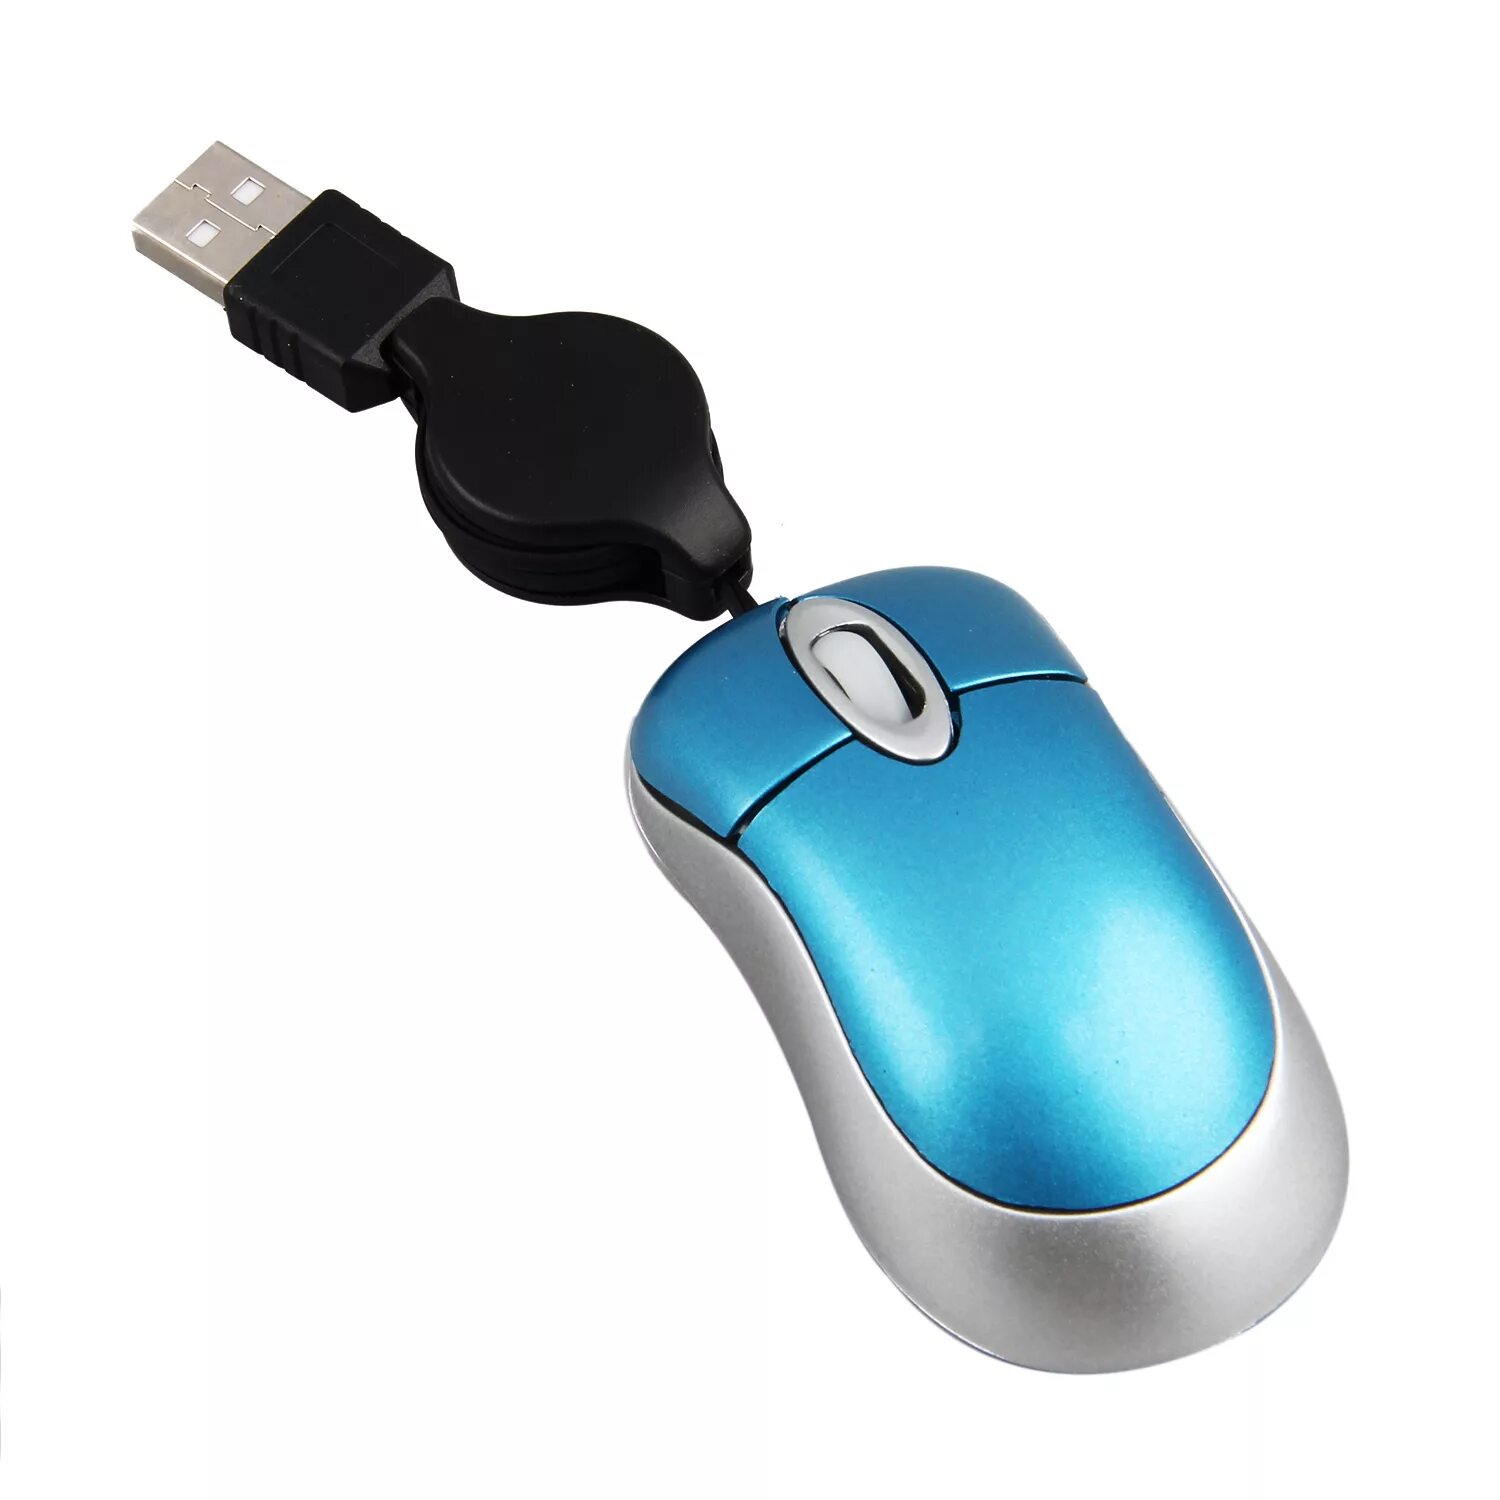 Usb мышь для ноутбука. Мышка с мини юсб. Мини мышь для ноутбука. Мышка мини для нетбука. Компьютерная мышка со шнуром.